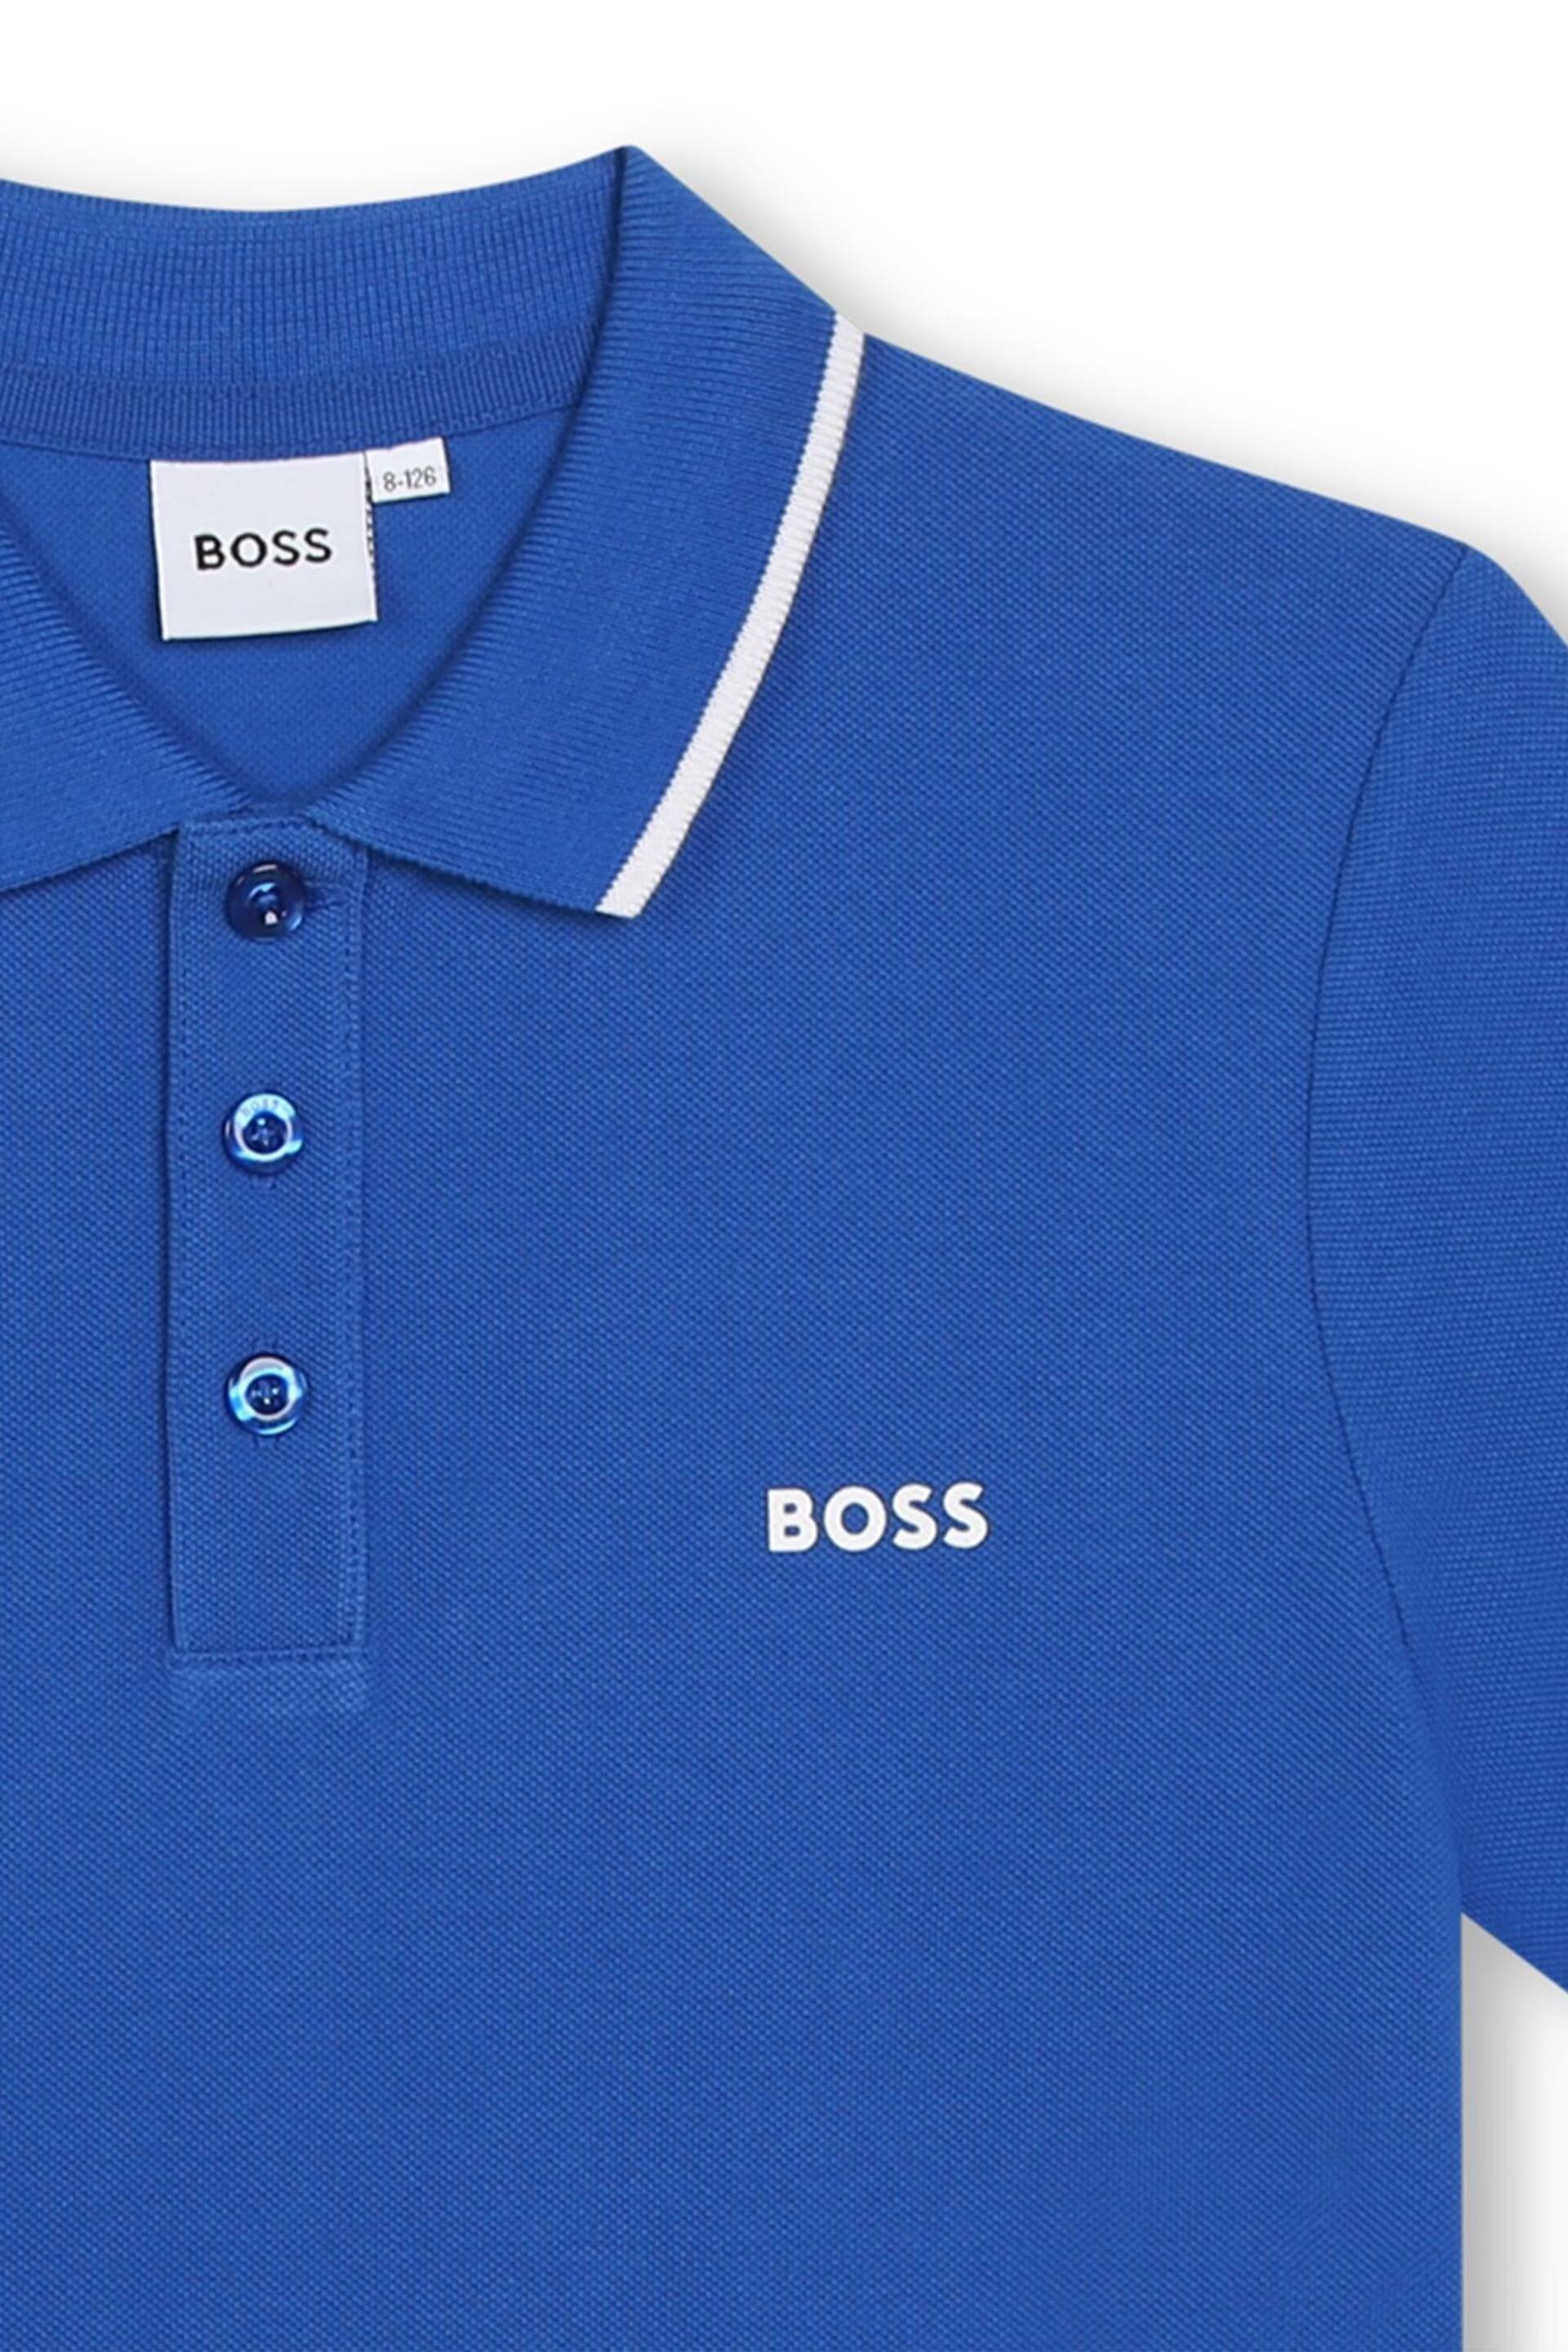 BOSS Blue Ground Short Sleeved Logo Polo Shirt - Image 3 of 3